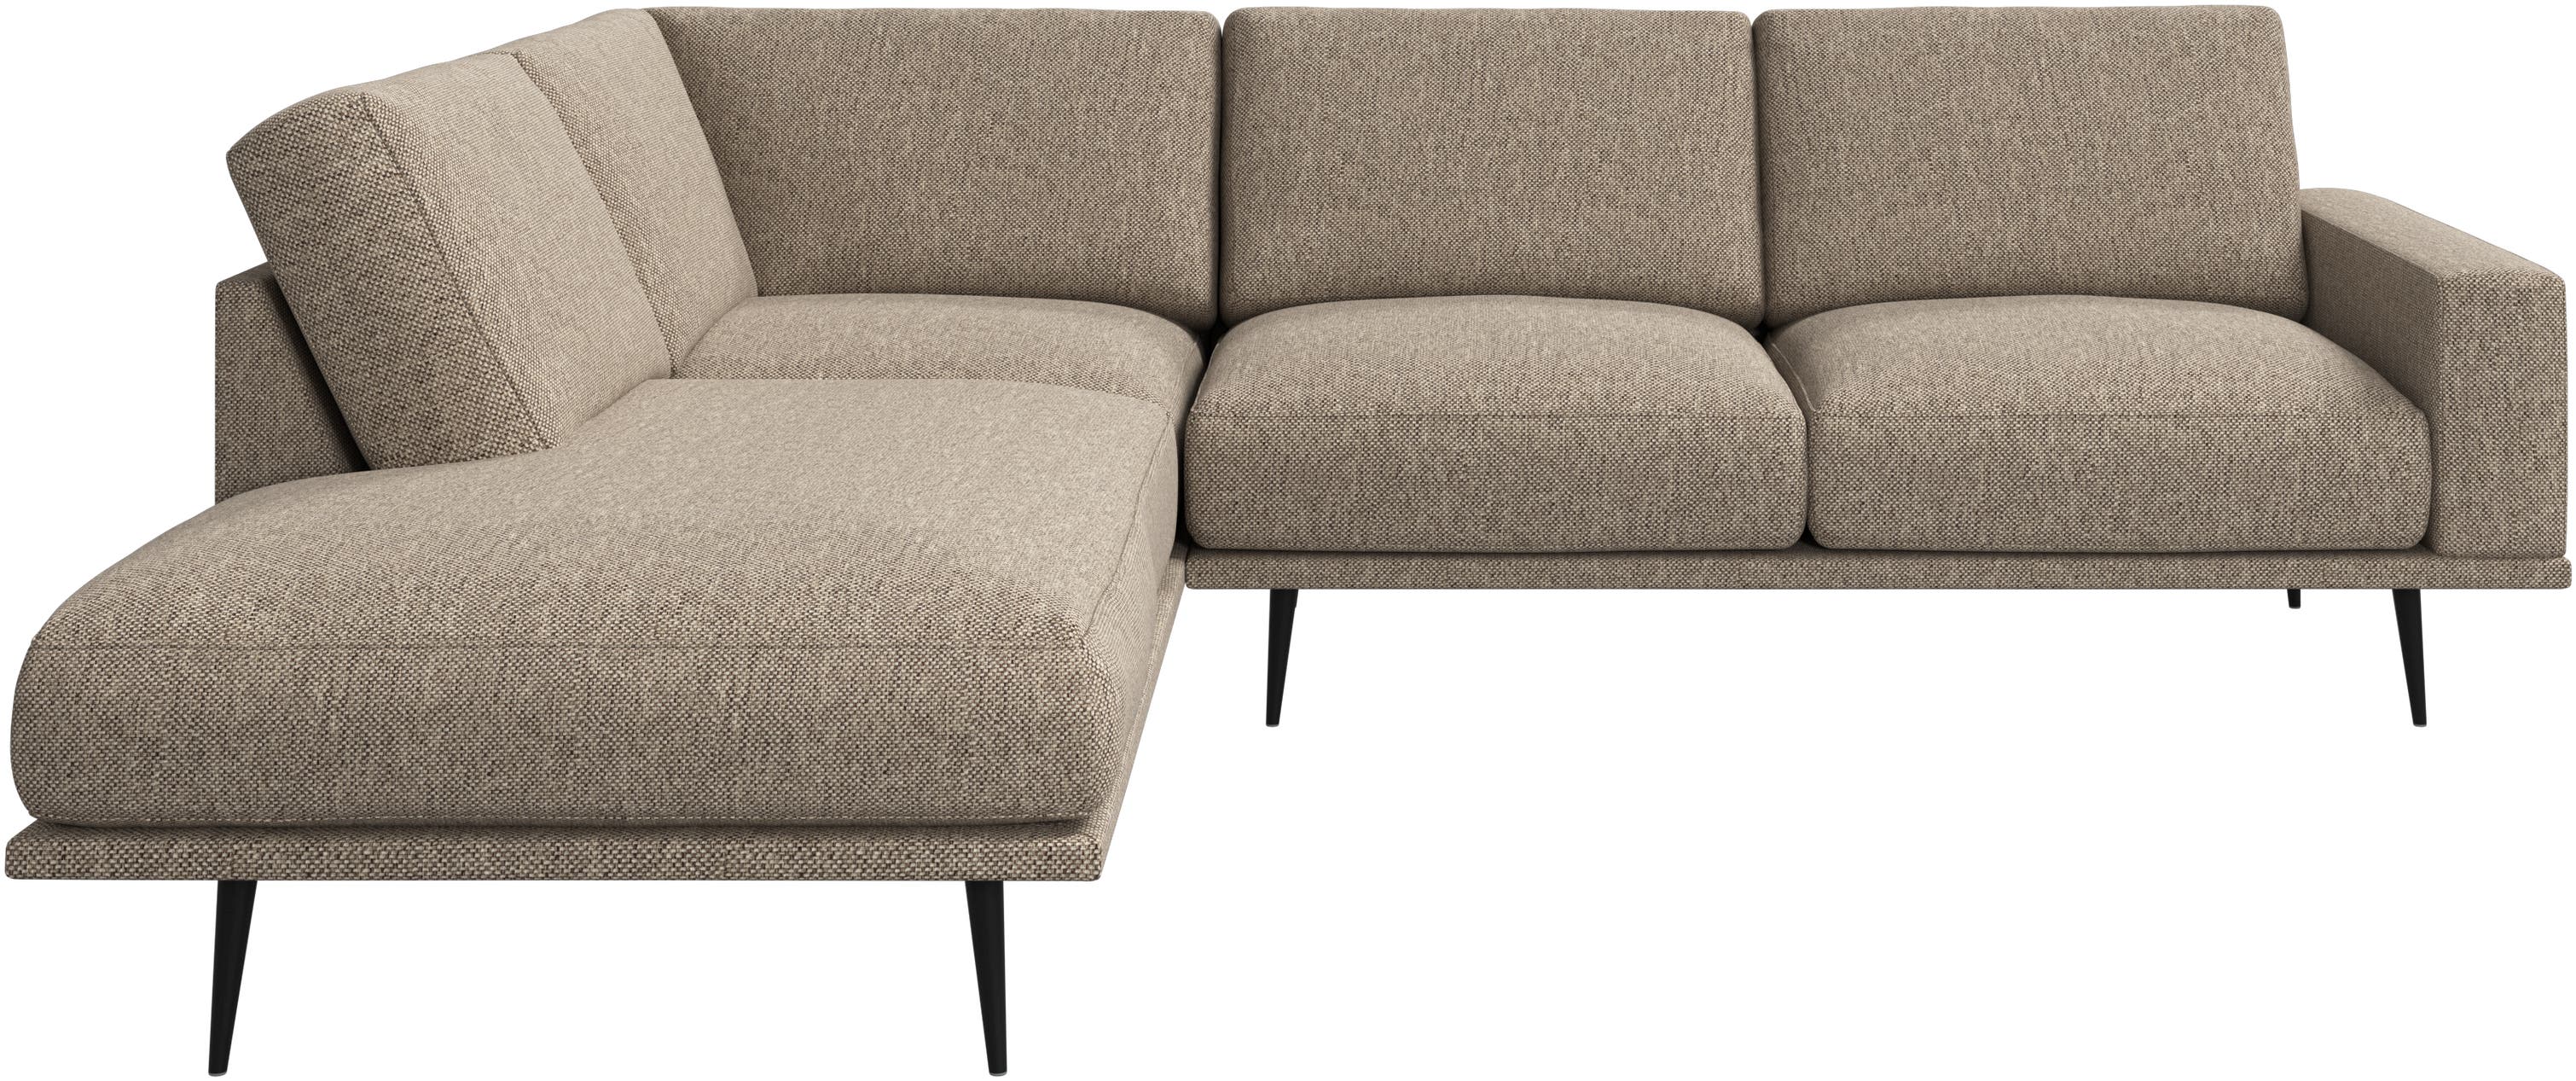 Carlton sofa with lounging units